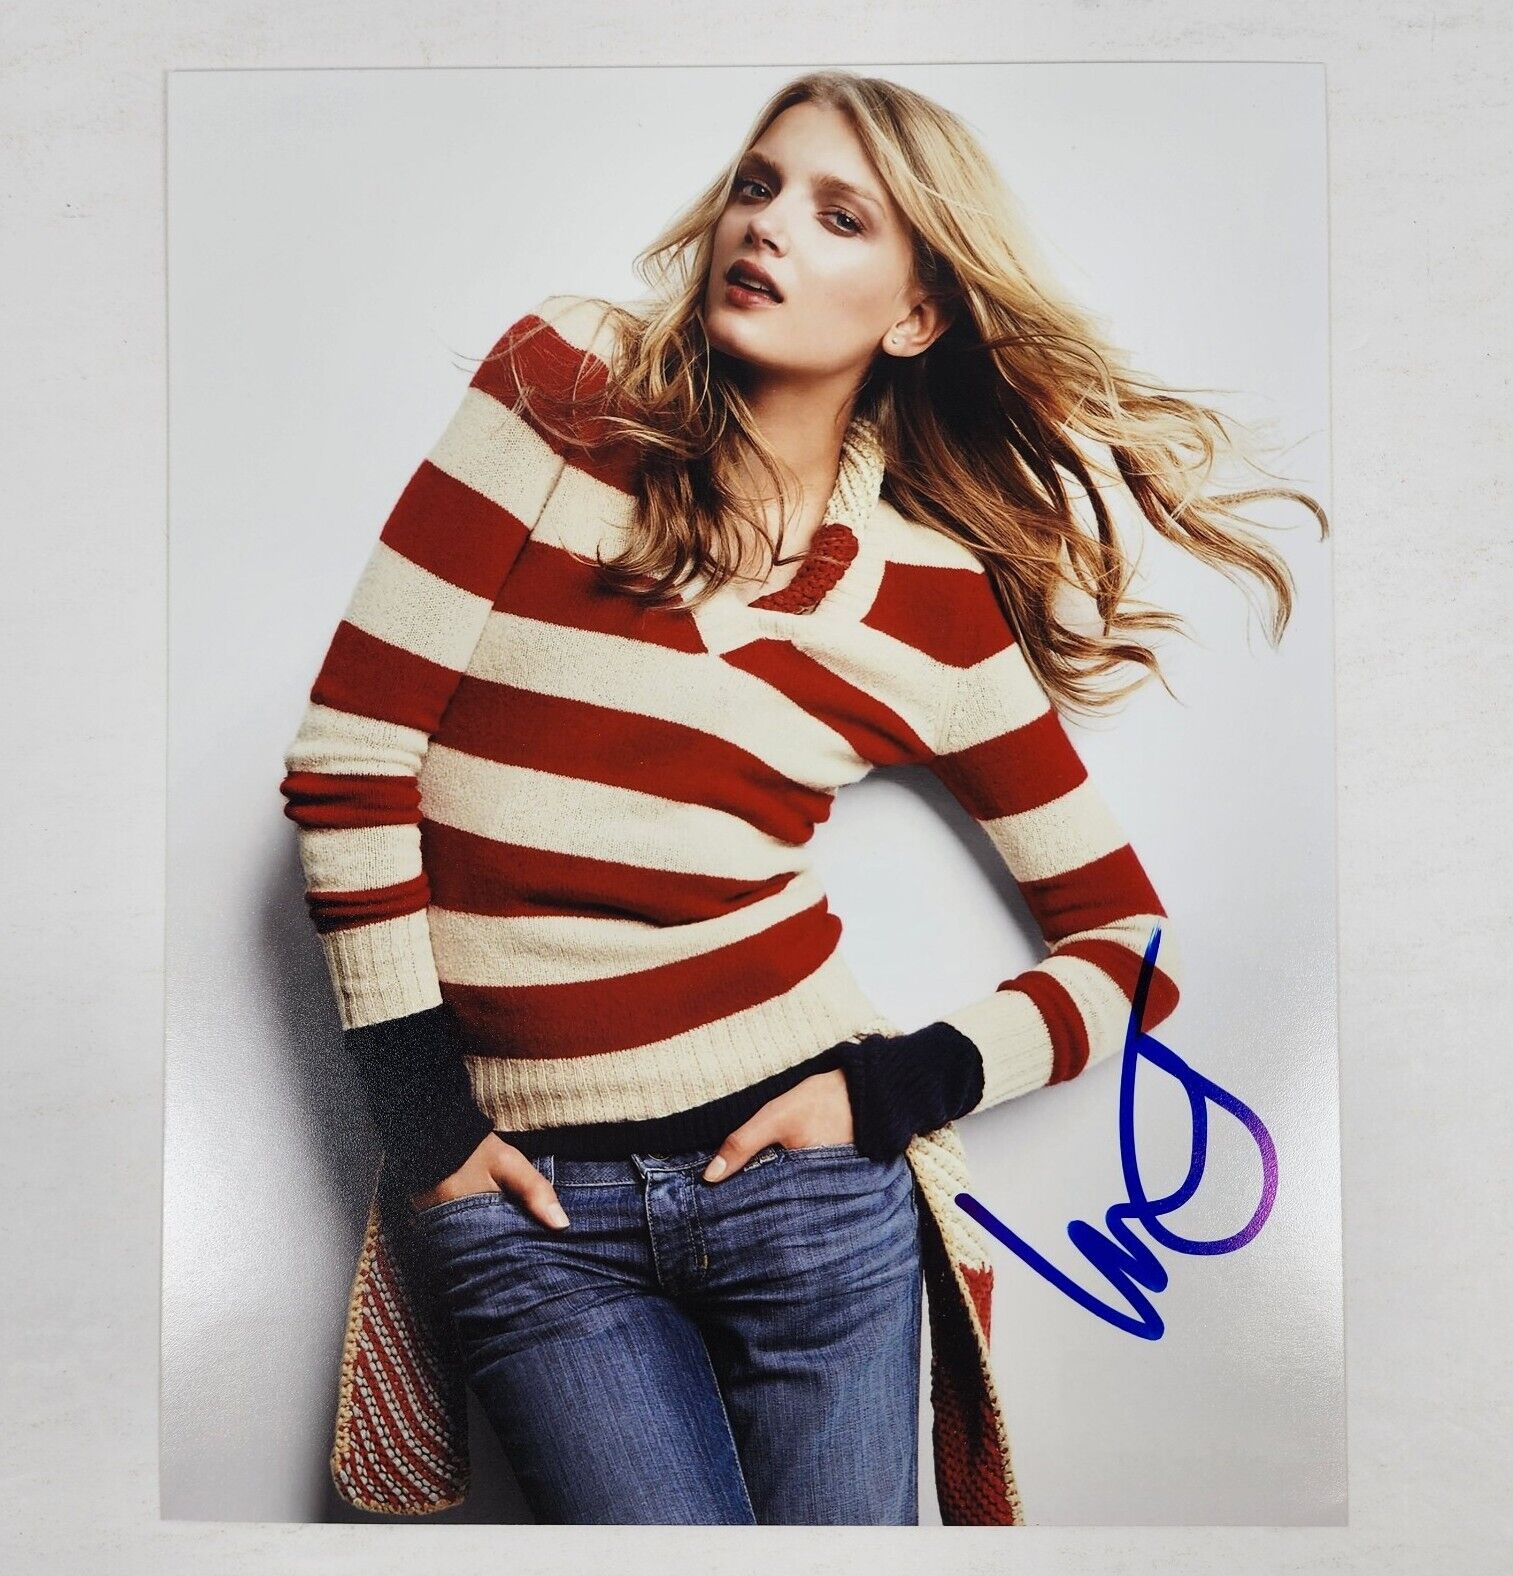 English Model Lily Donaldson Signed 8x10 Autograph (No COA) Photo Picture